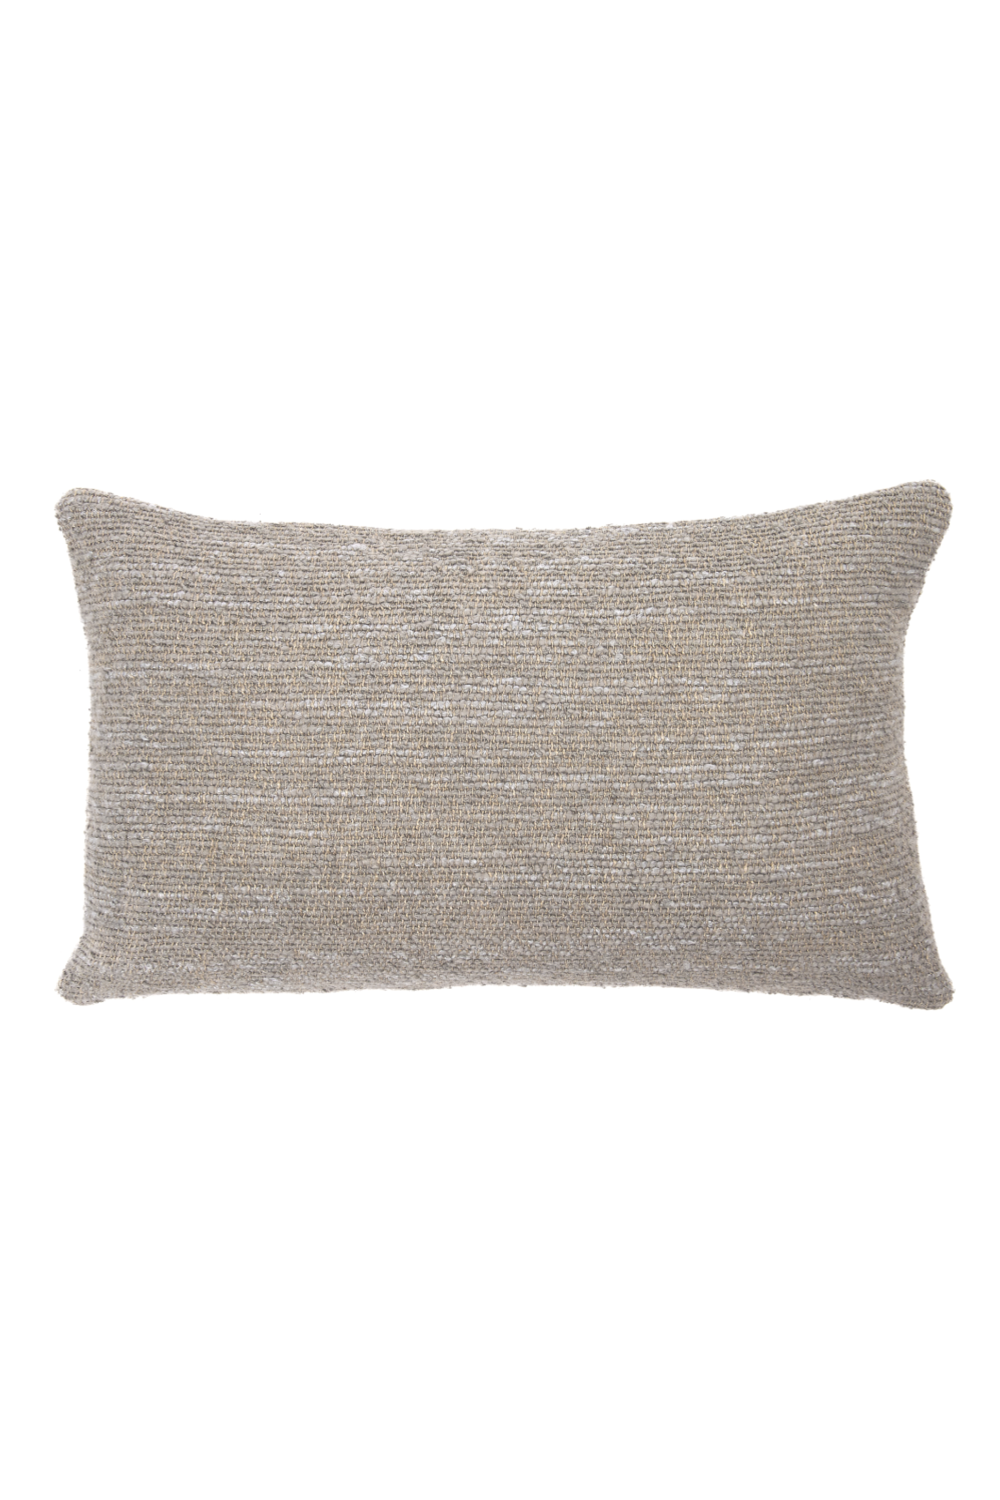 Rectangular Jacquard Throw Pillows (2) | Ethnicraft Nomad | OROA